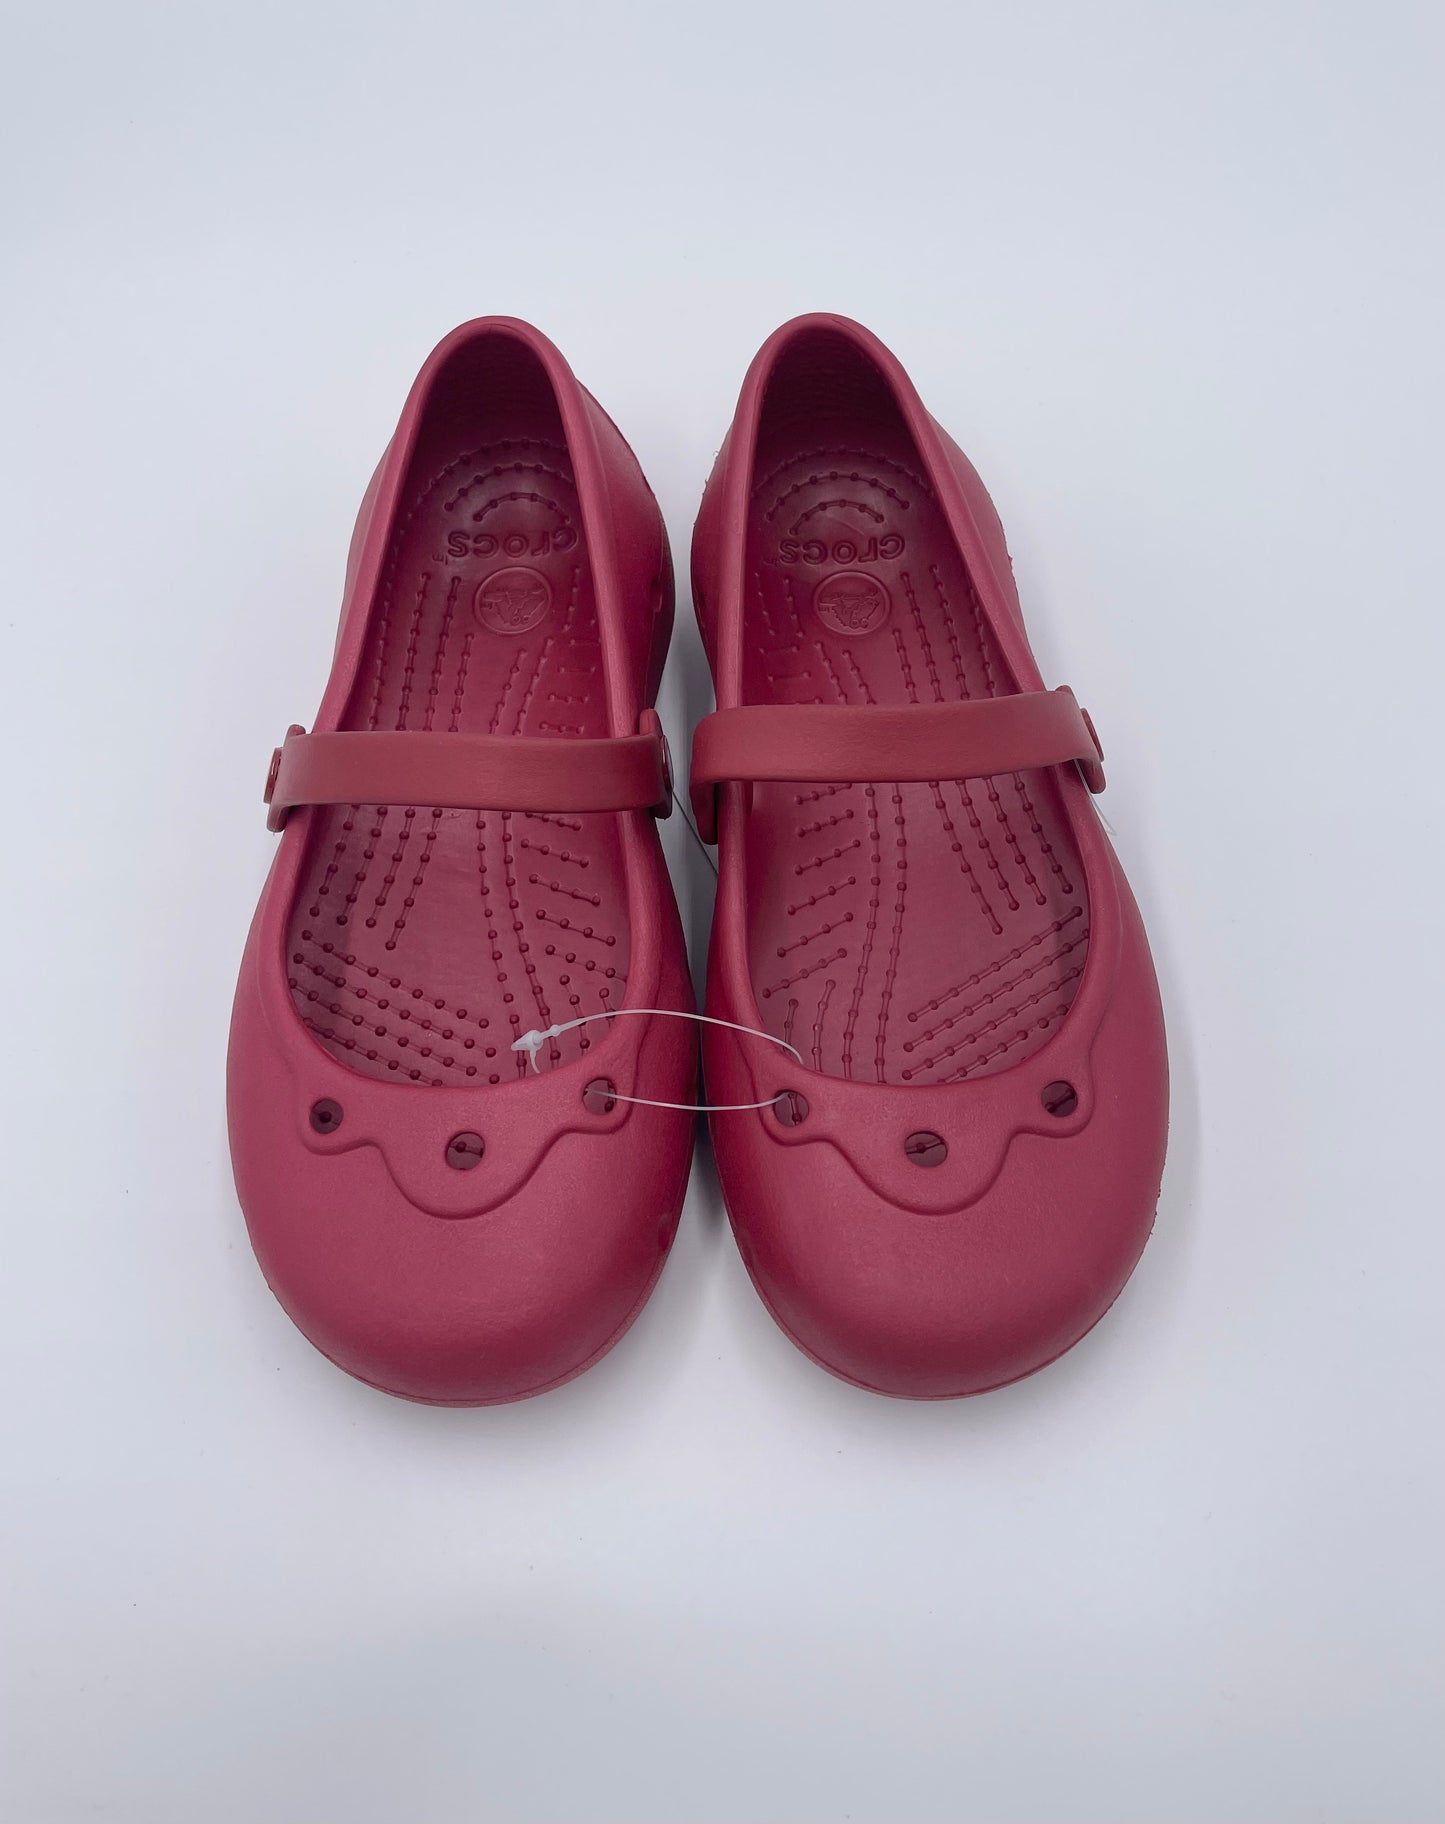 Crocs ballerina ruby red kids - Crocs